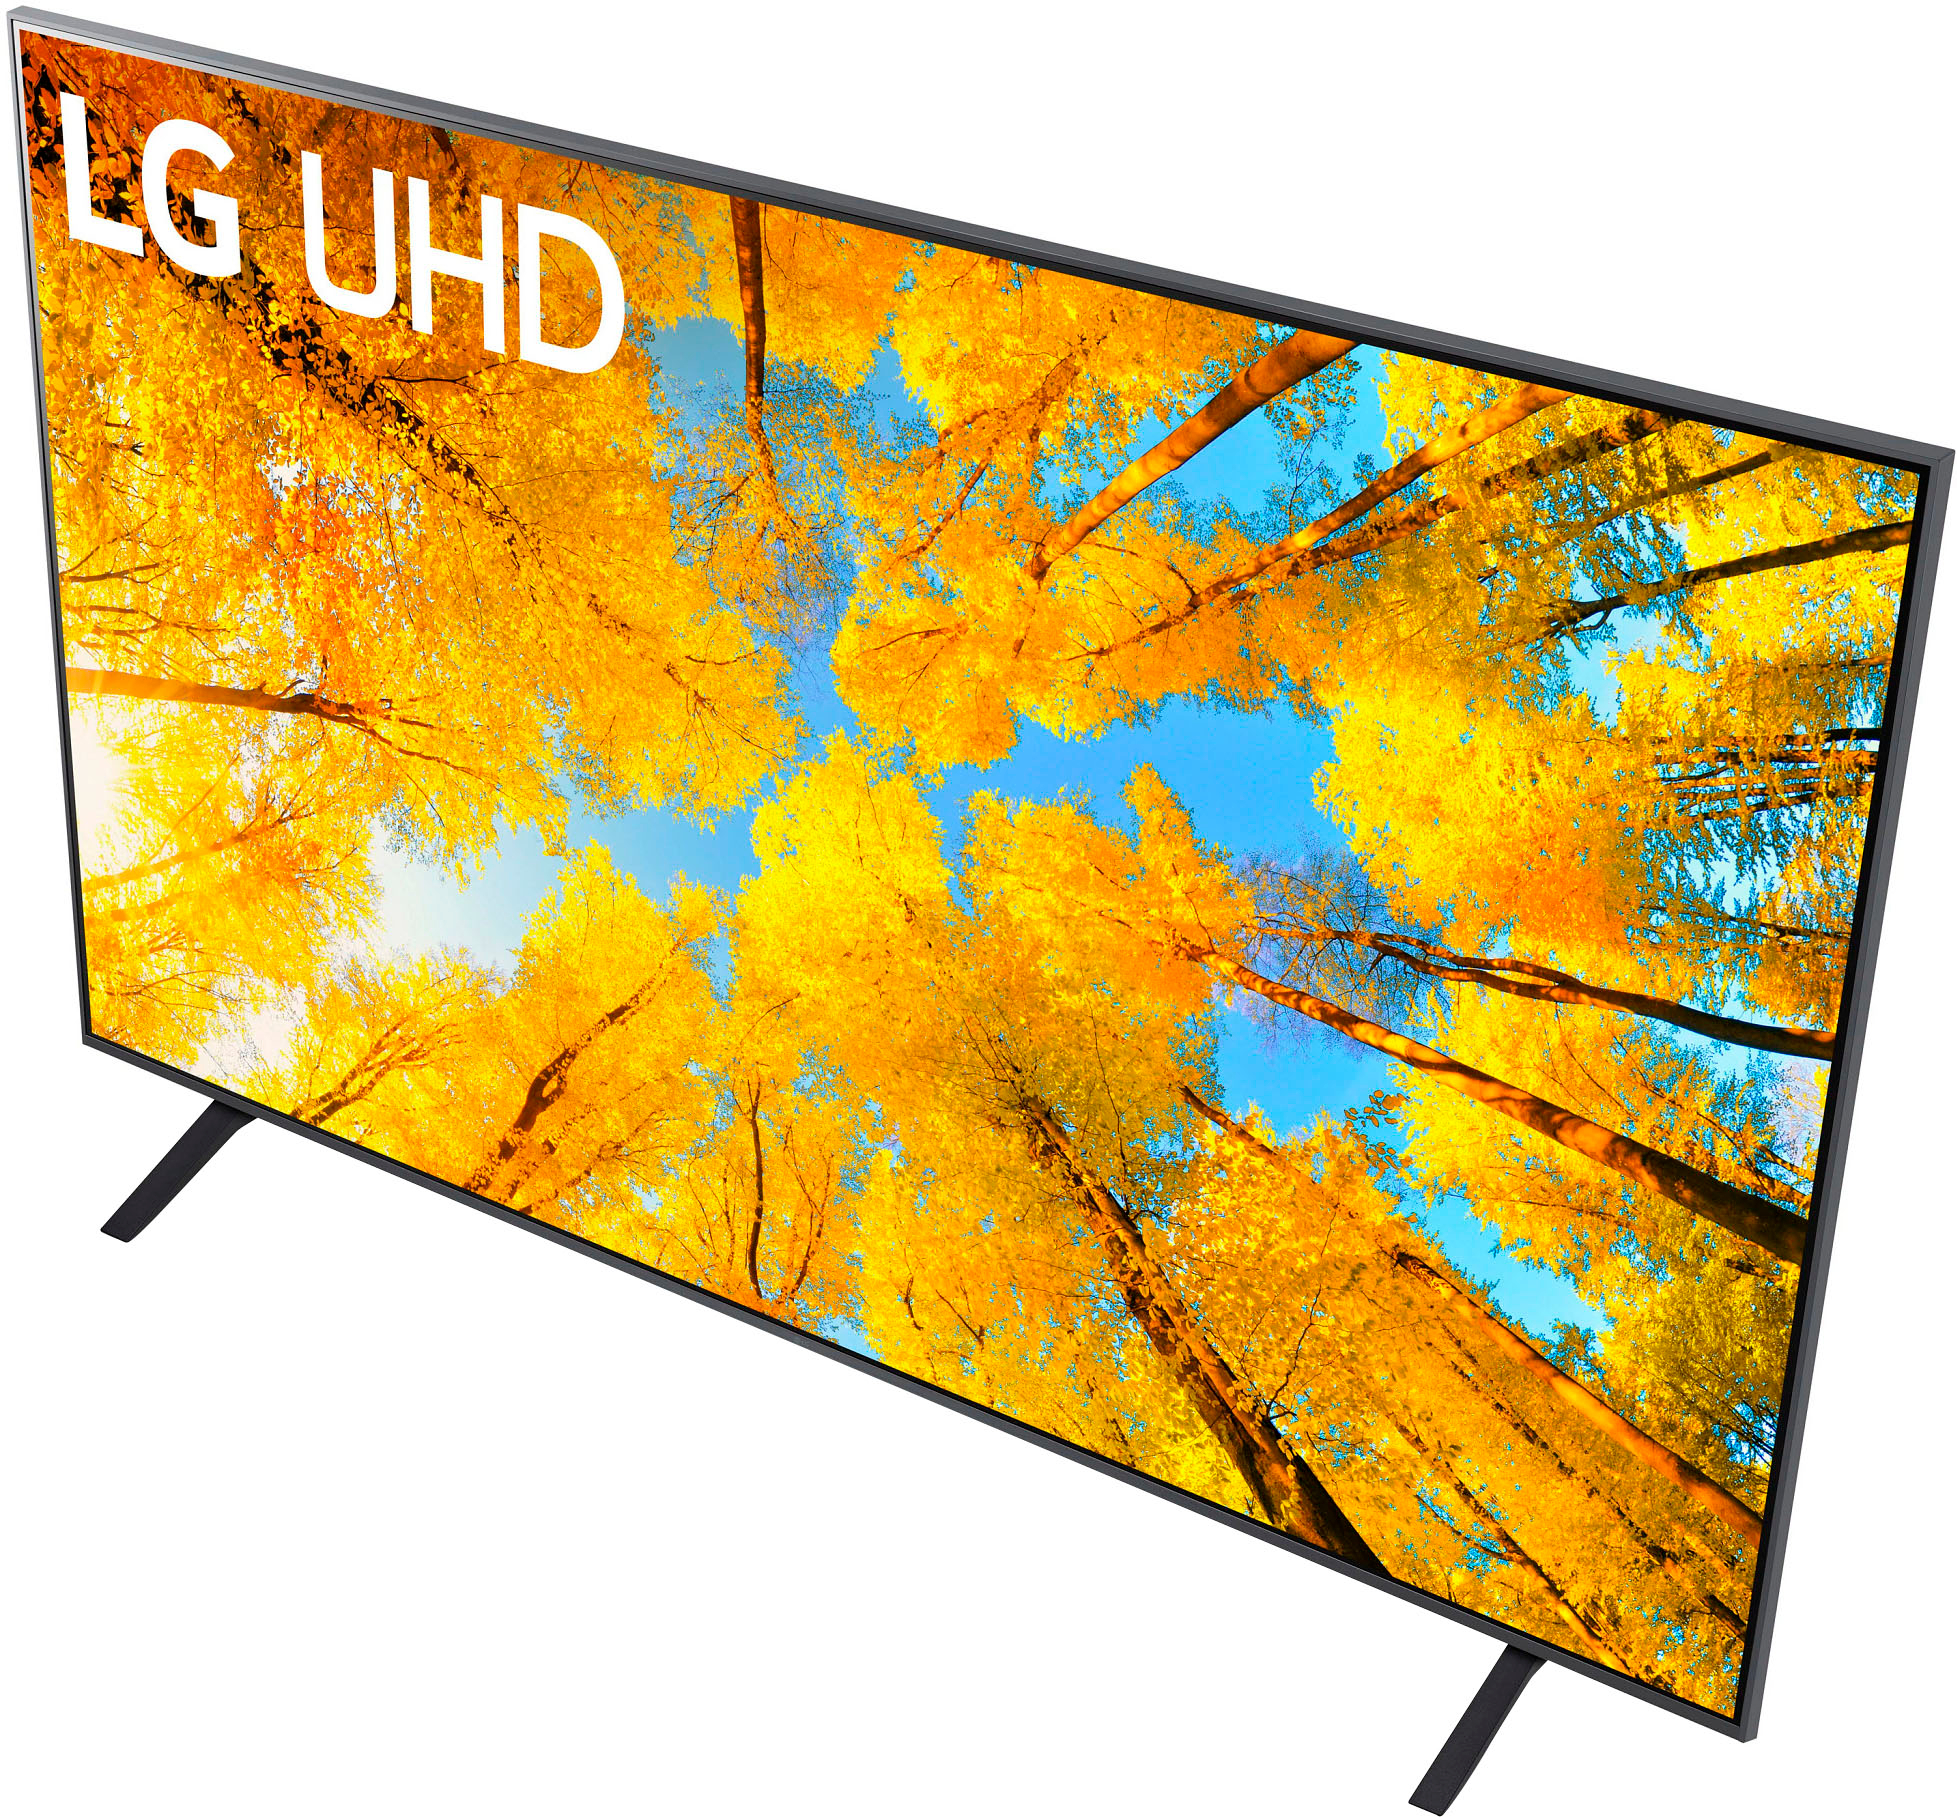 LG 75” Class UQ75 Series LED 4K UHD Smart webOS TV 75UQ7590PUB - Best Buy